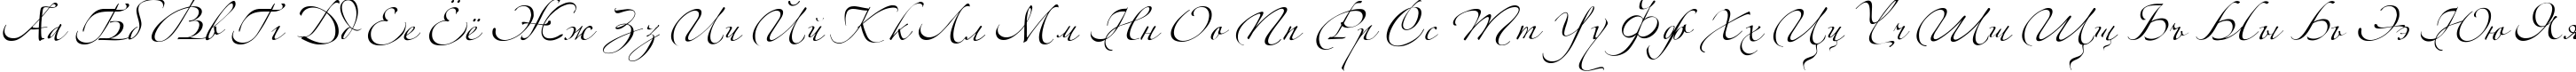 Пример написания русского алфавита шрифтом Alexandra Zeferino One